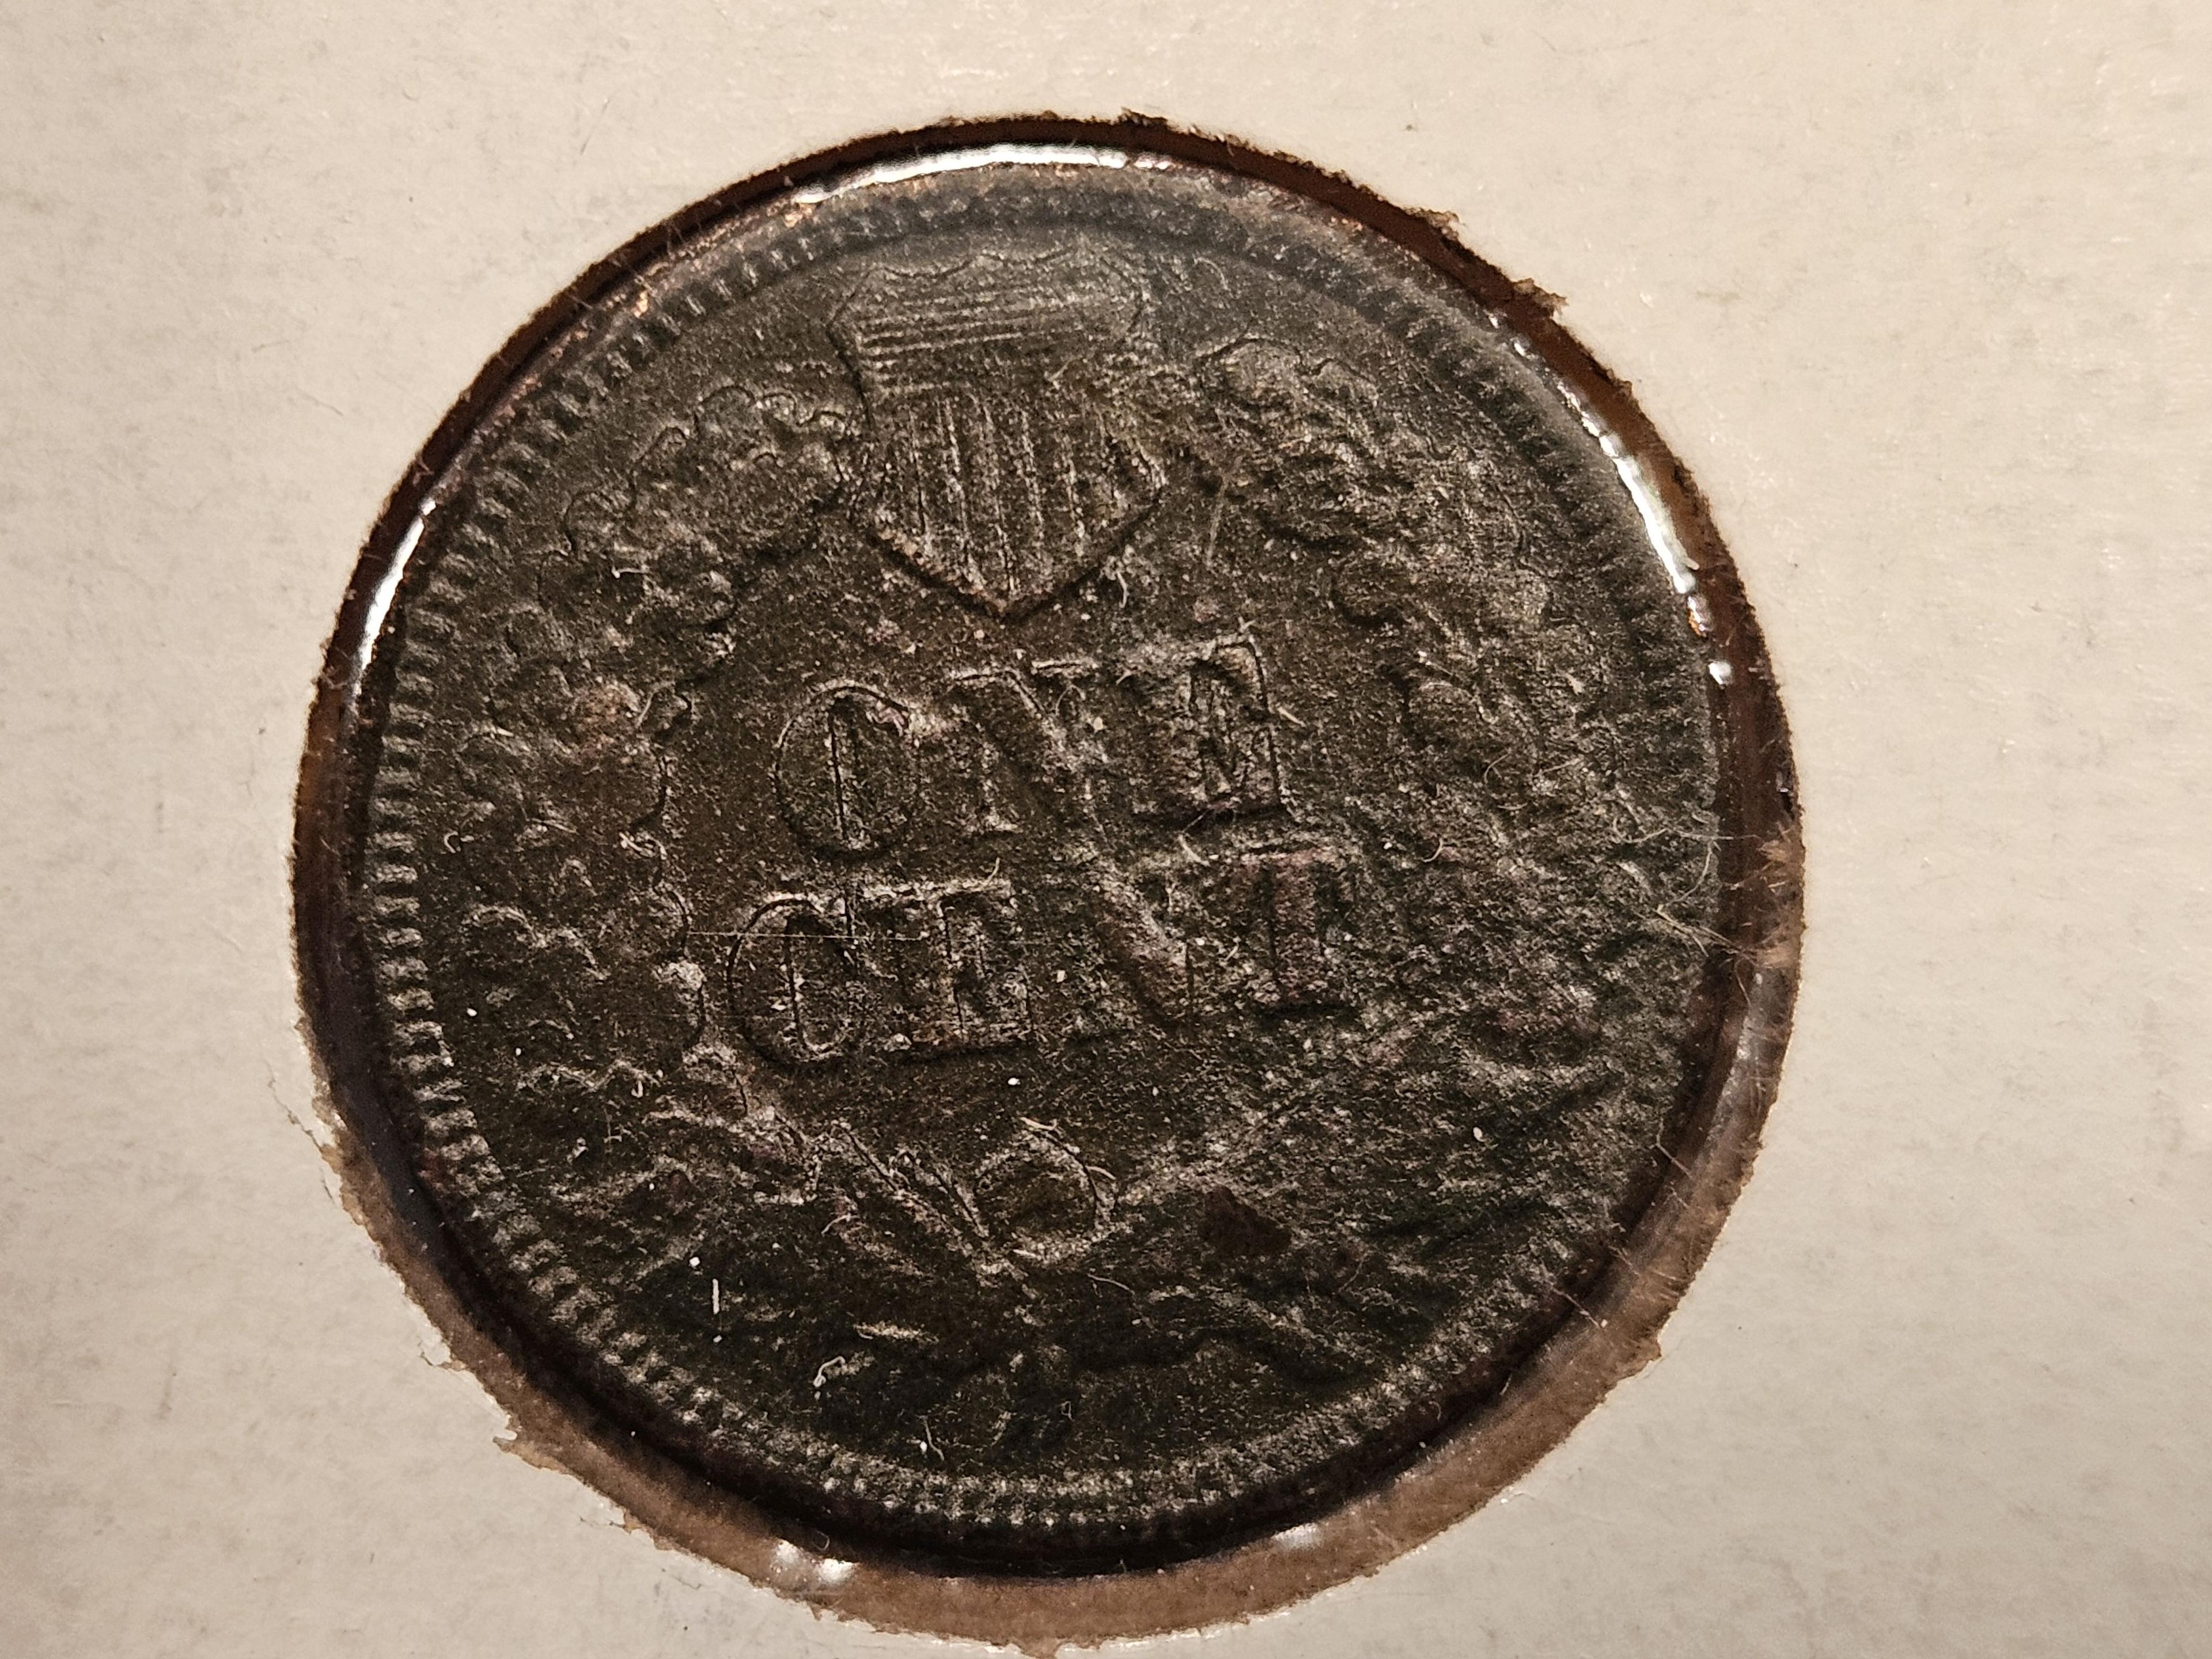 Semi-key 1868 Indian Cent